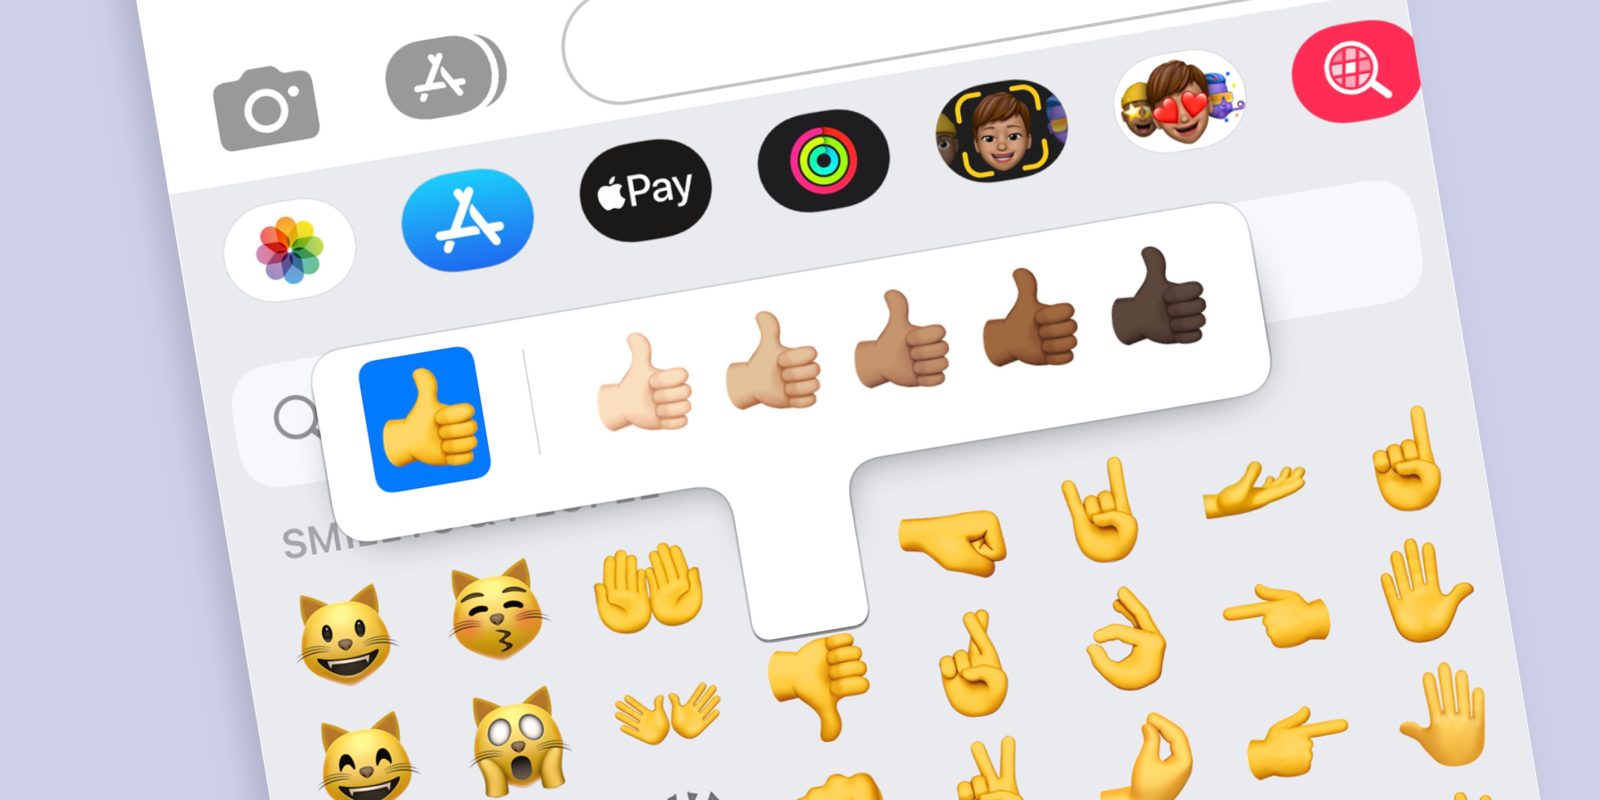 iOS 15.4 release brings over 100 new emoji - 9to5Mac